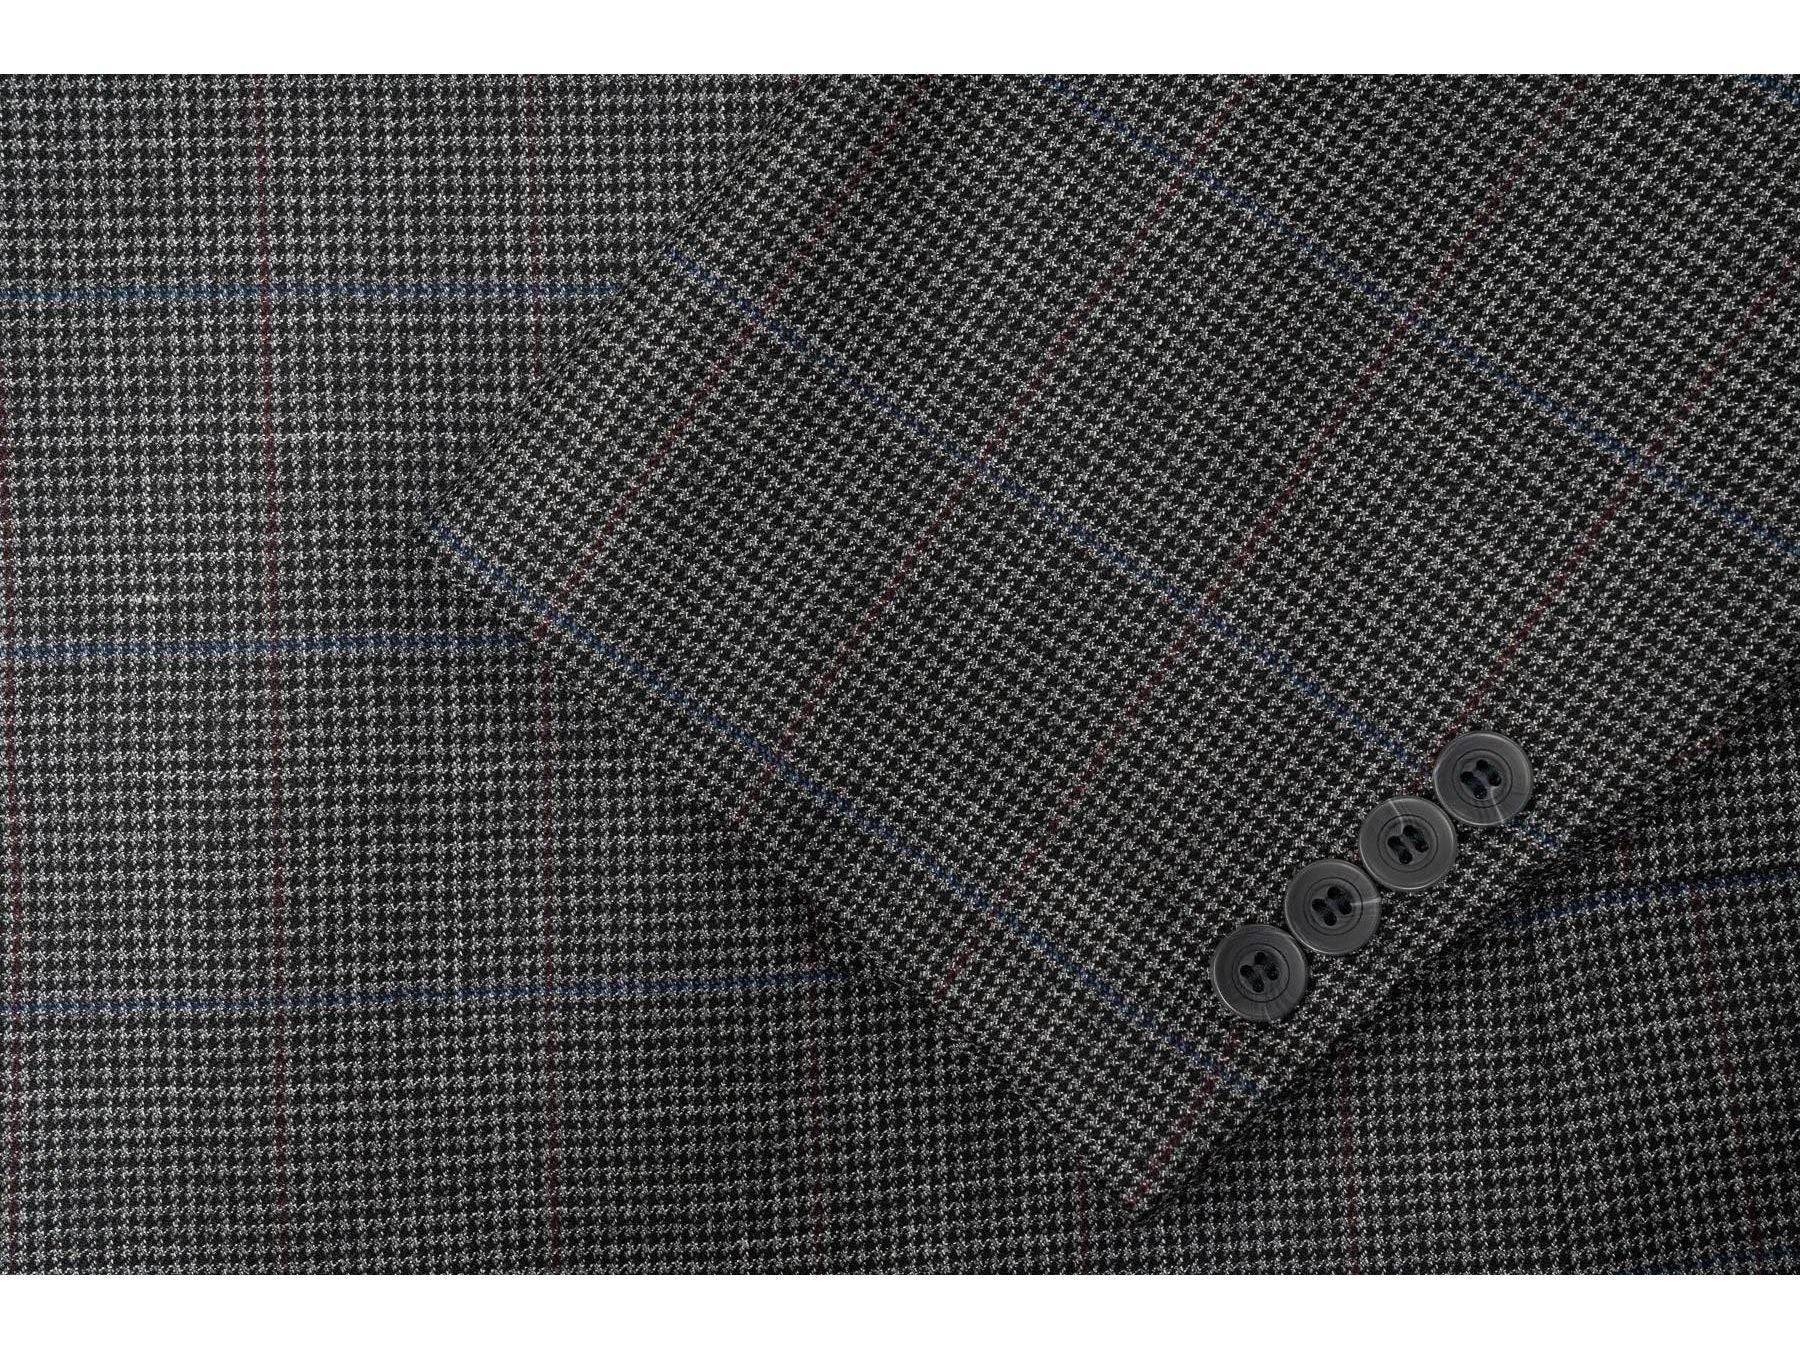 Rainwater's Grey Houndstooth Wool Sport Coat - Rainwater's Men's Clothing and Tuxedo Rental